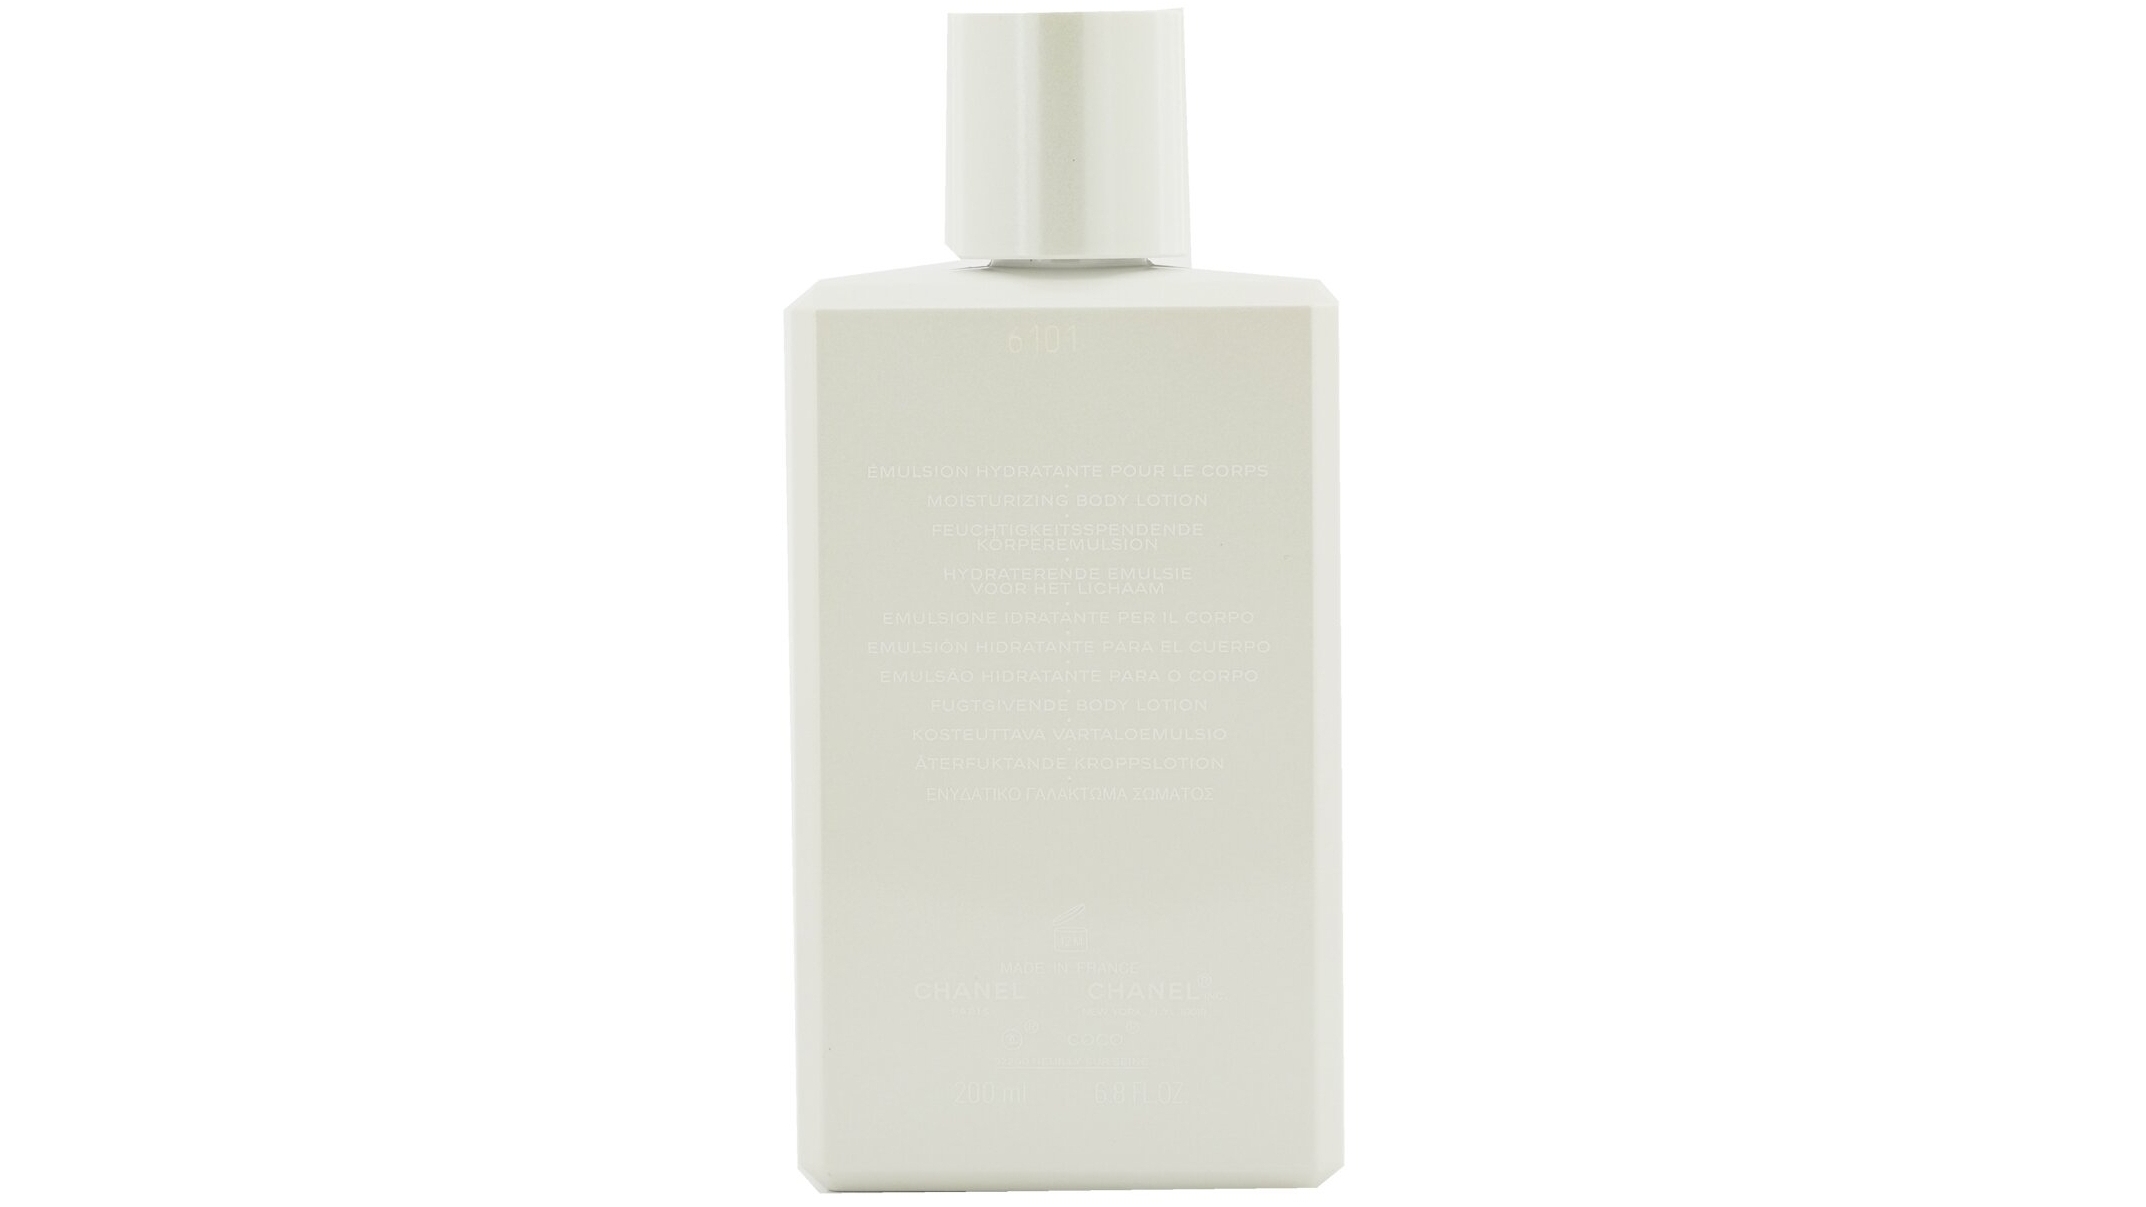 Chanel Fragrance Moisturizing Body Lotion200 ml 6.8 oz COSME-DE.COM